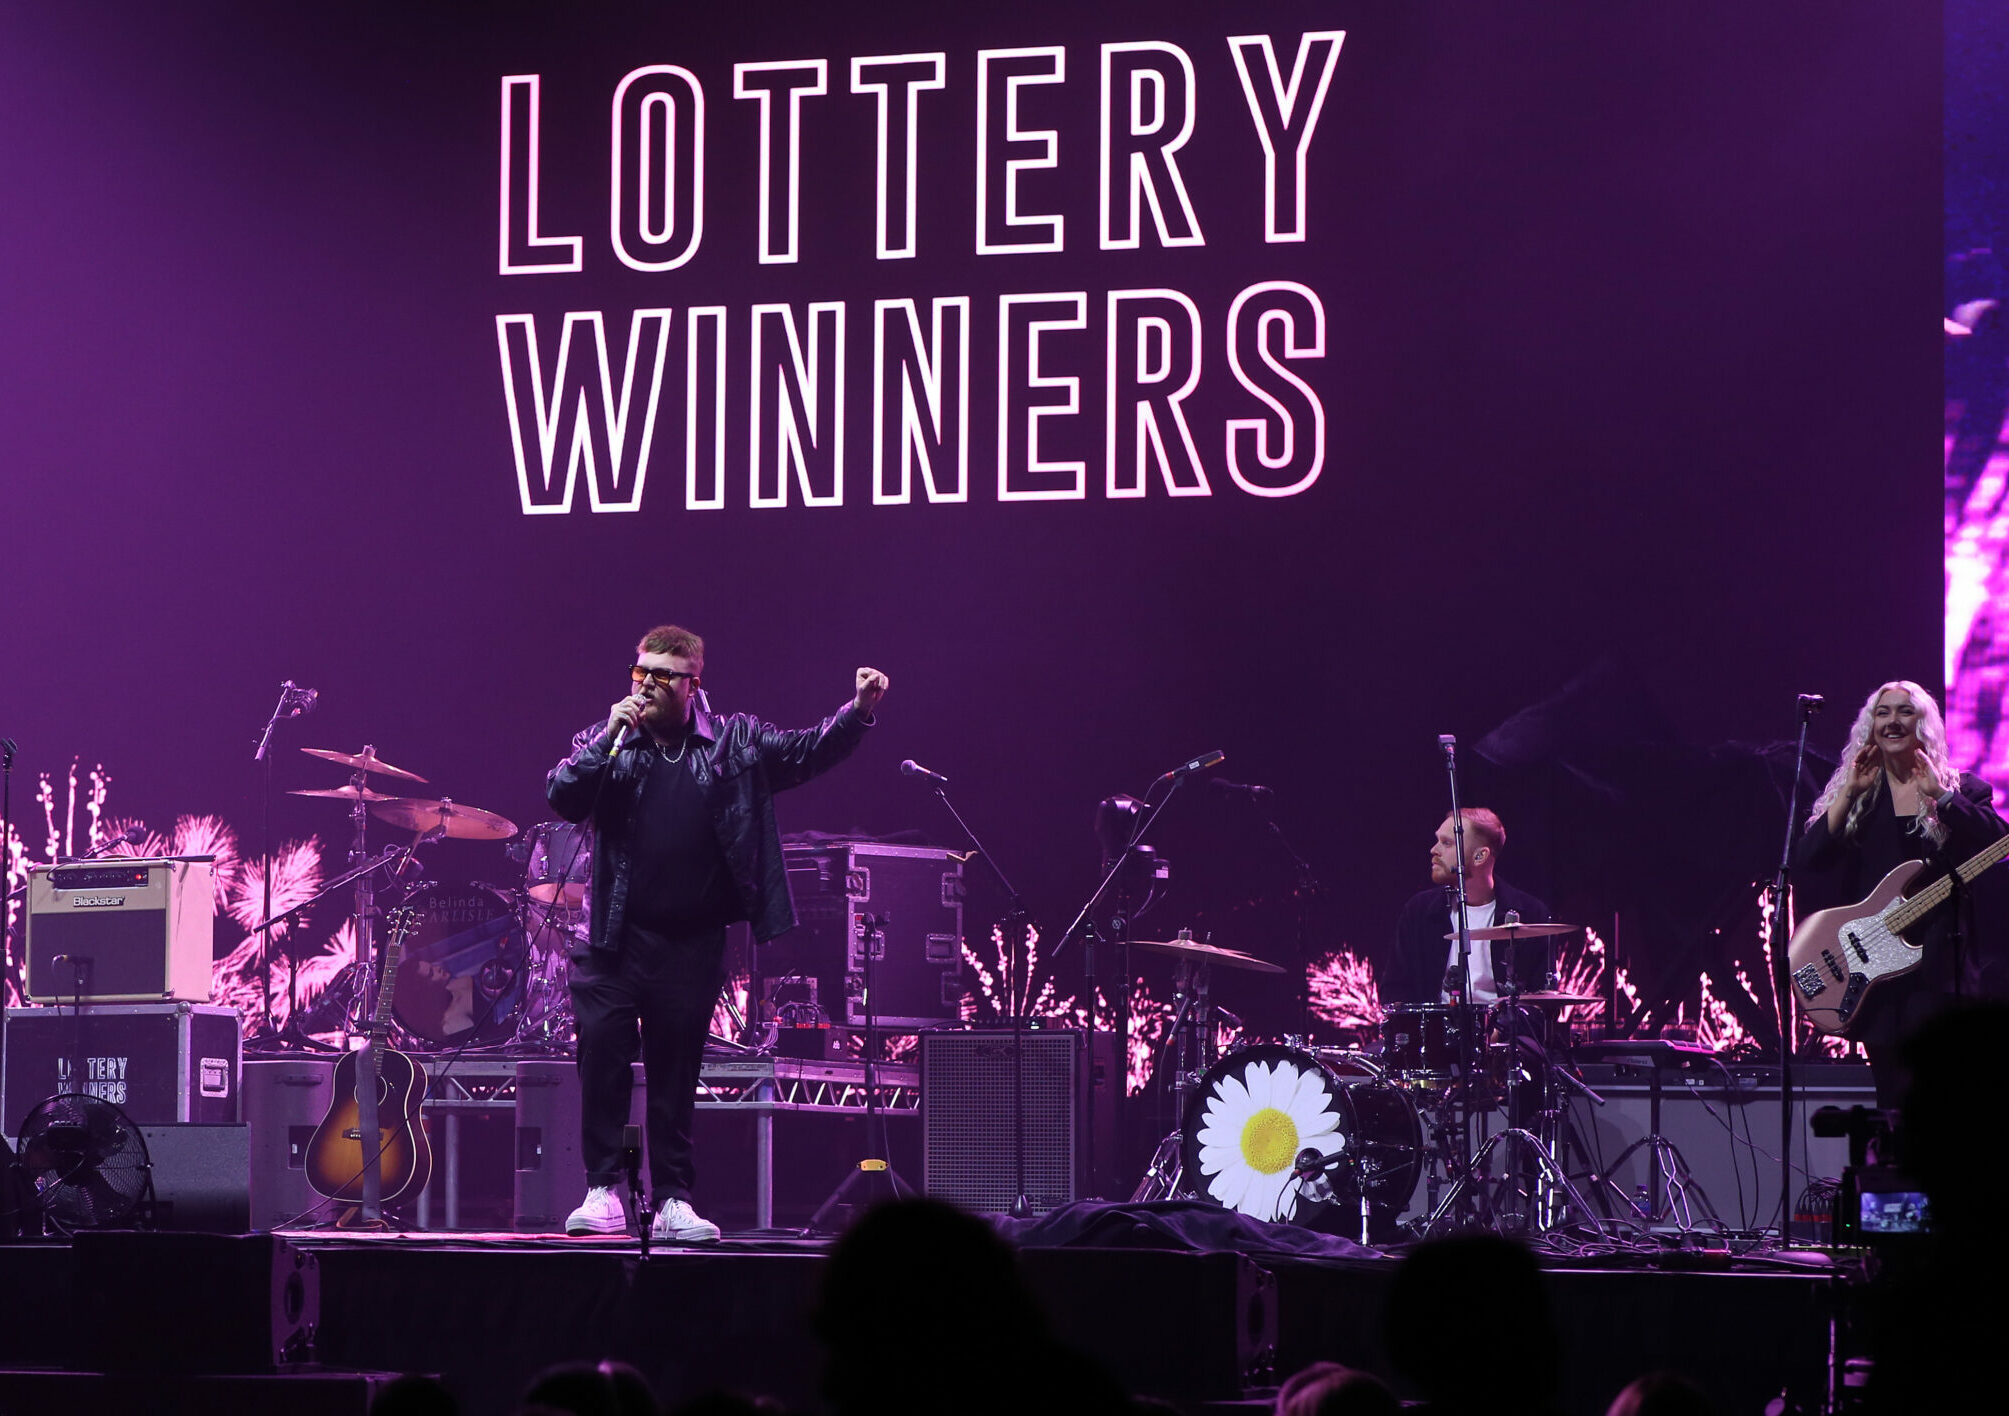 The Lottery Winners